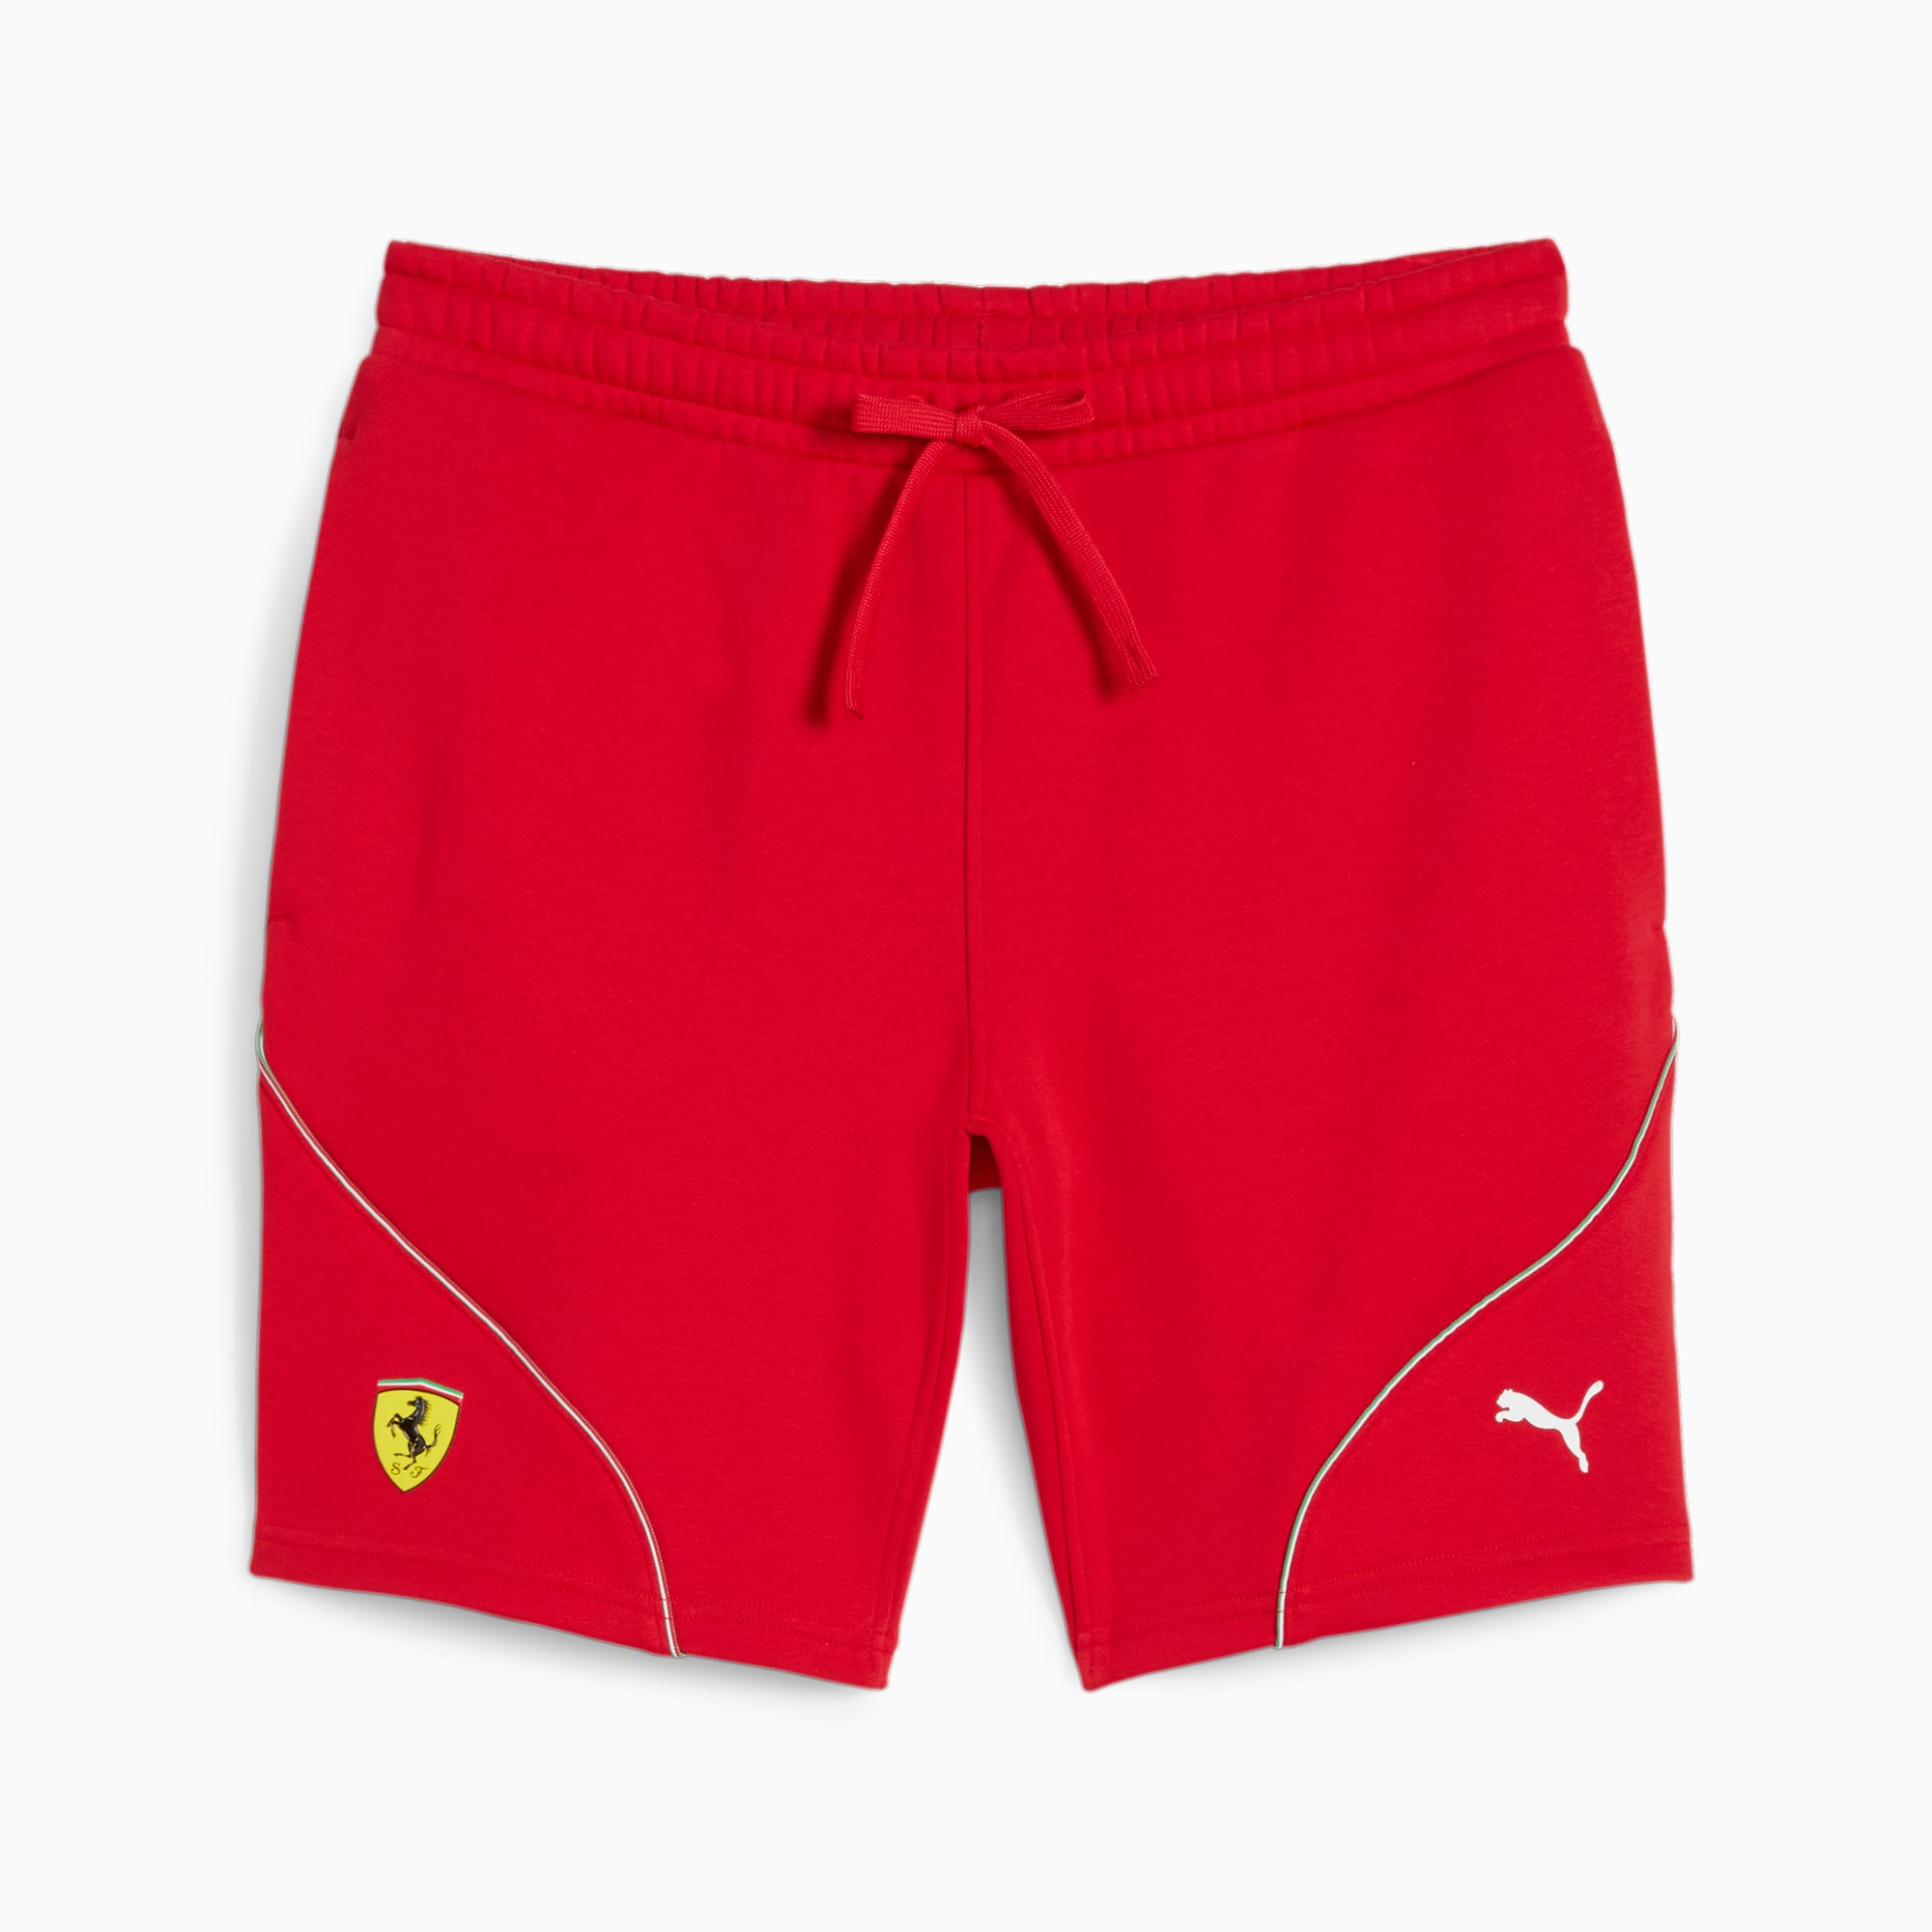 PUMA Scuderia Ferrari Men's Motorsport Race Shorts, Red, Size XS, Clothing